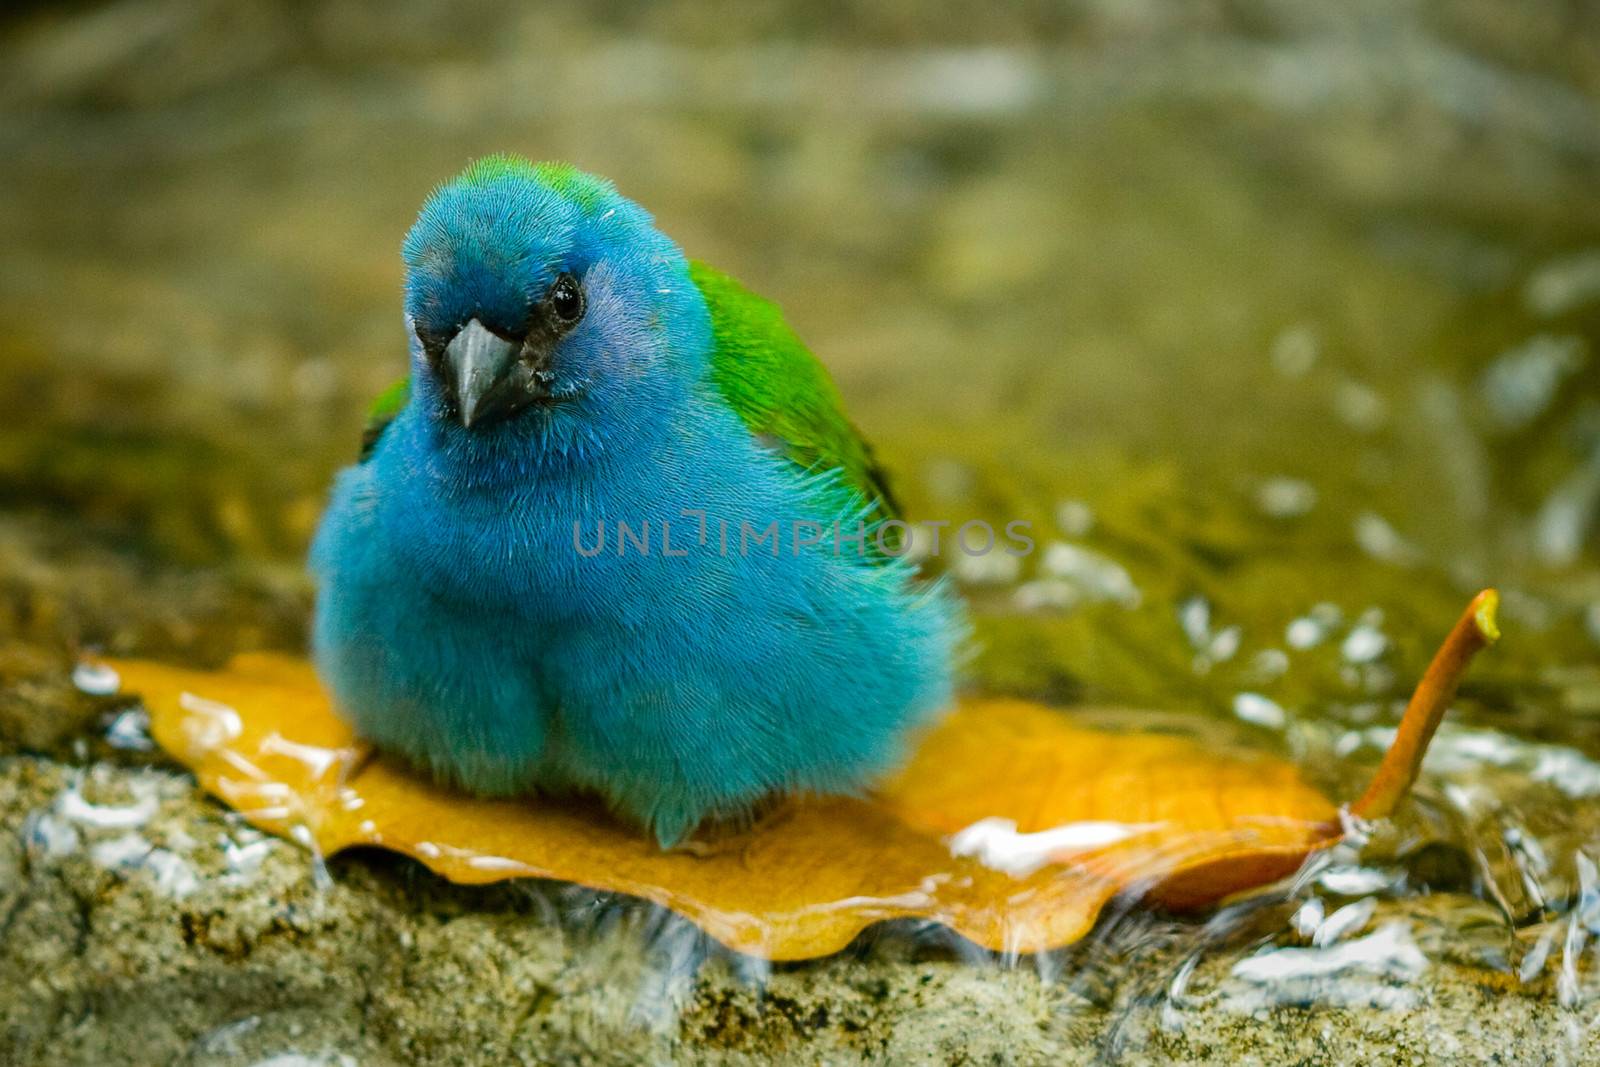 Blue bird taking bath by CelsoDiniz